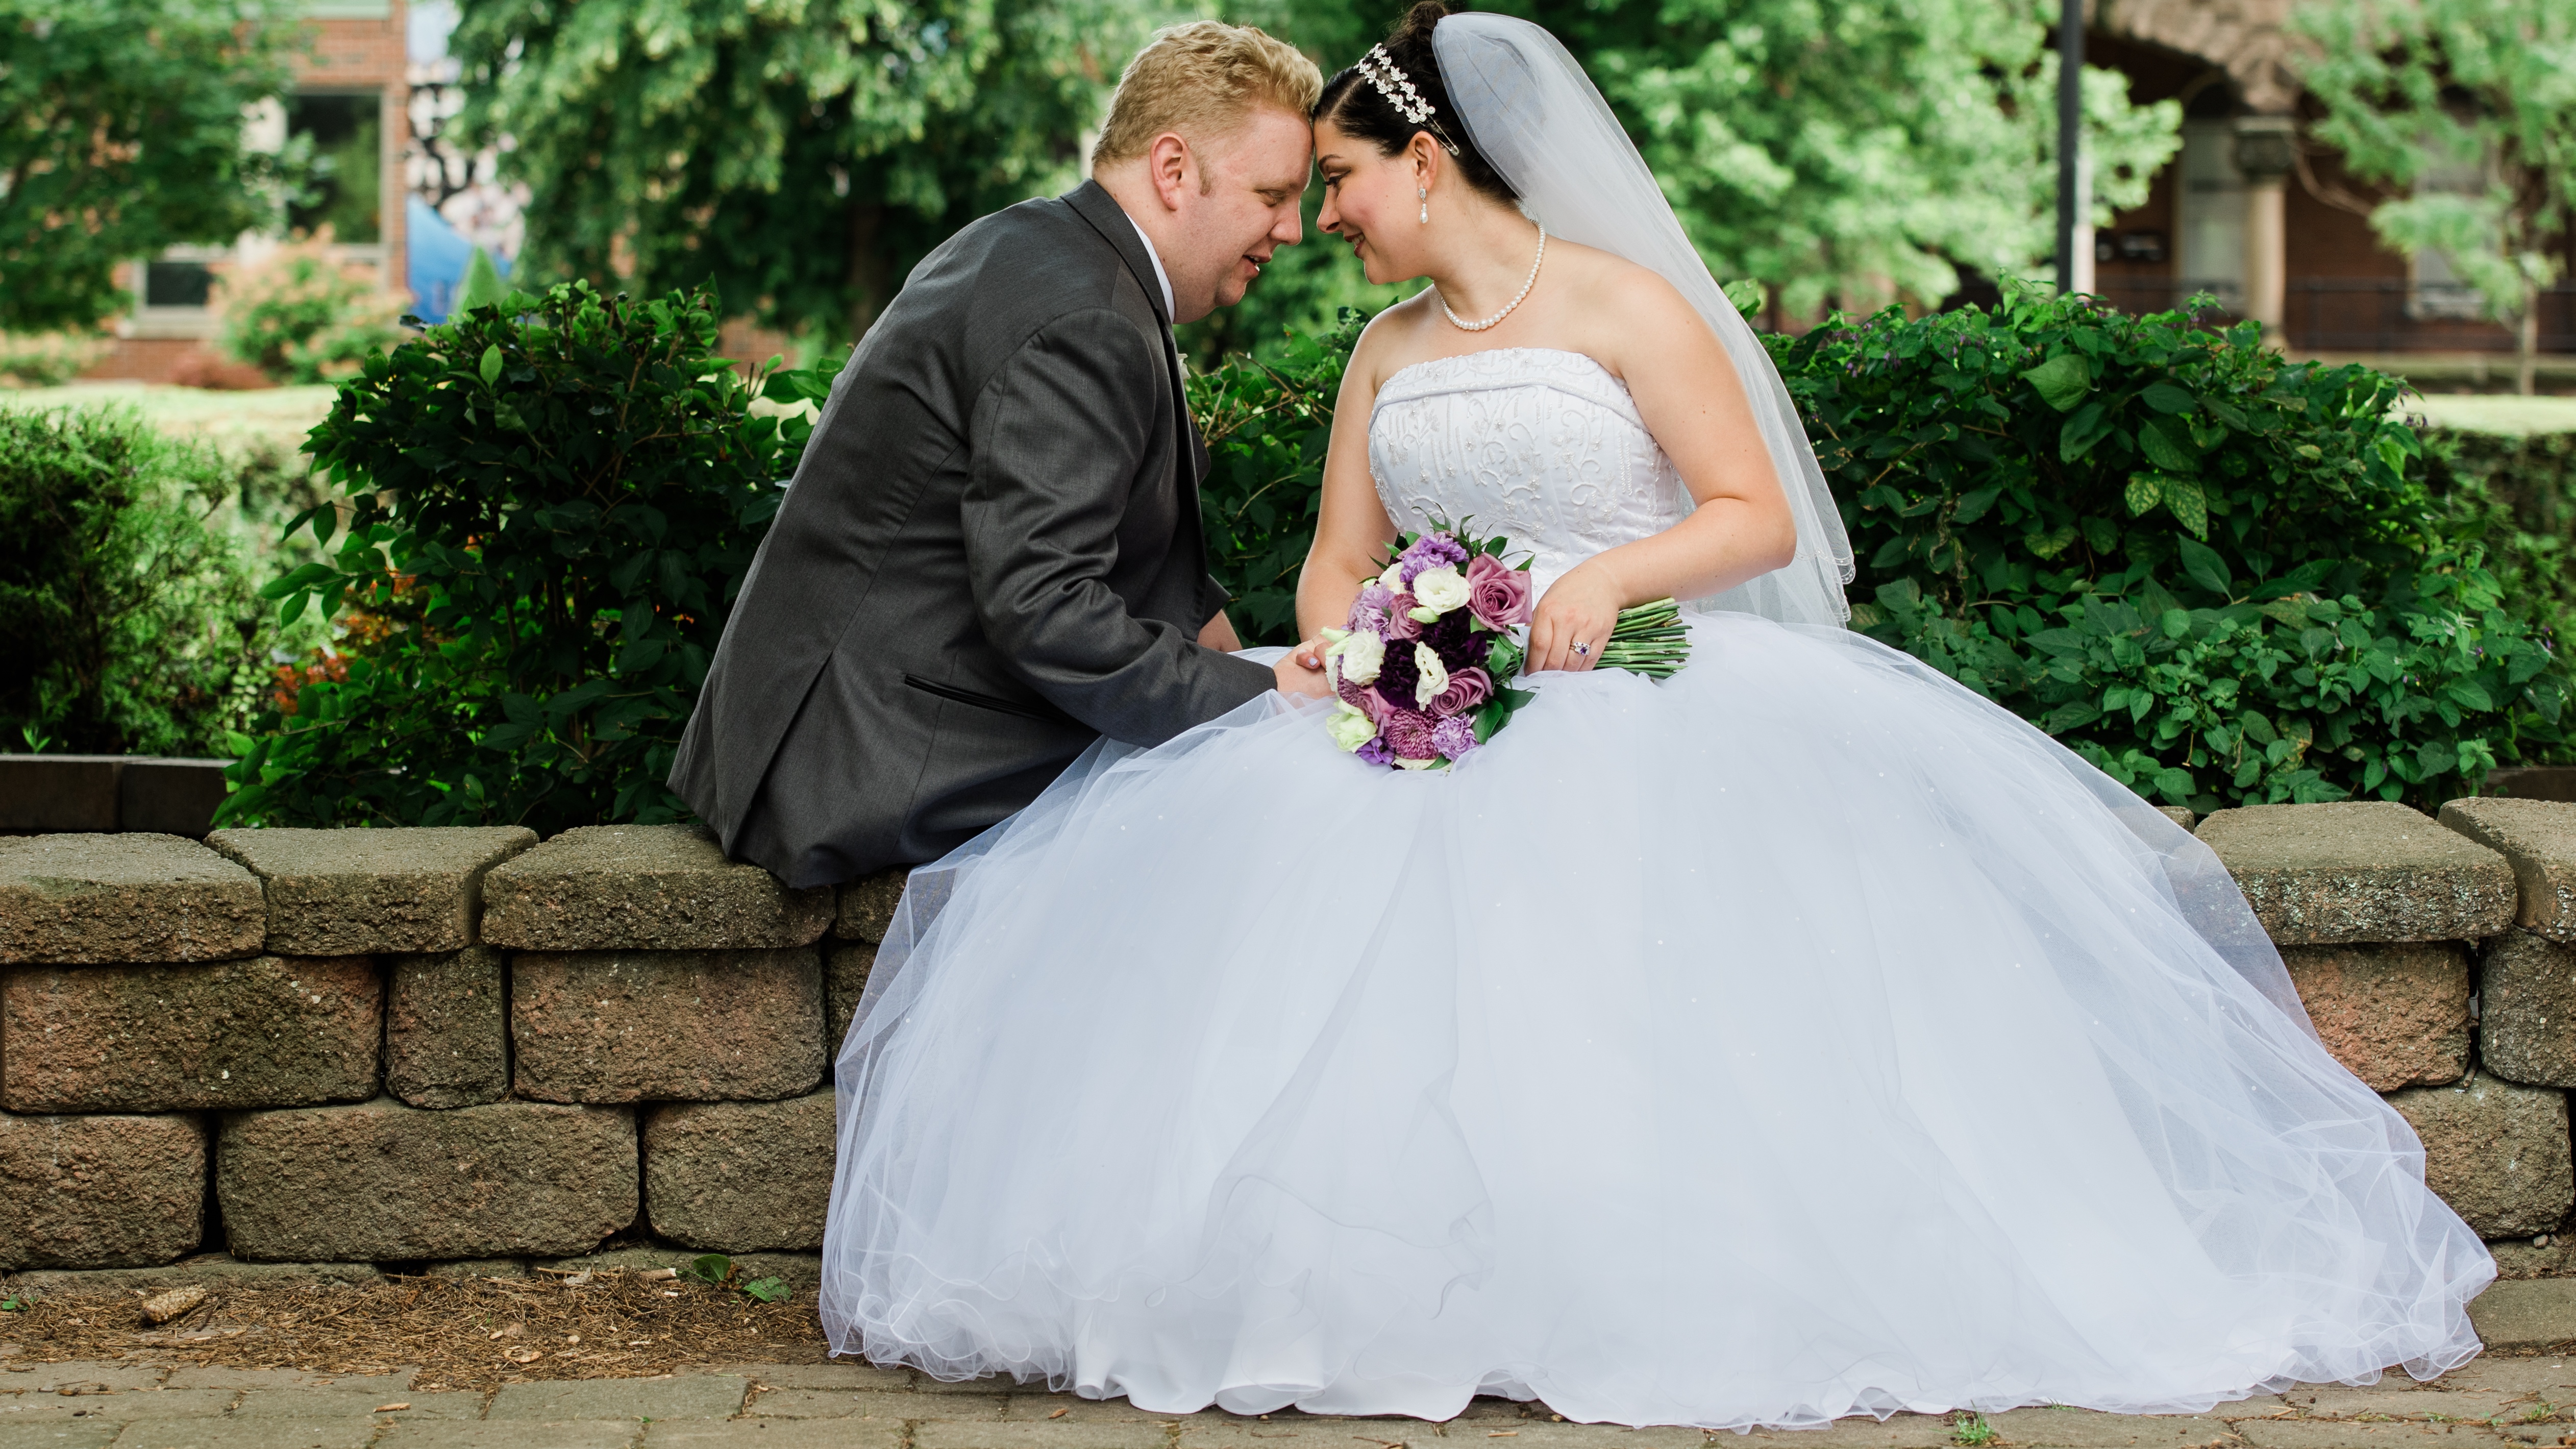 Chris and Adrienne|Buffalo Wedding Photography Image